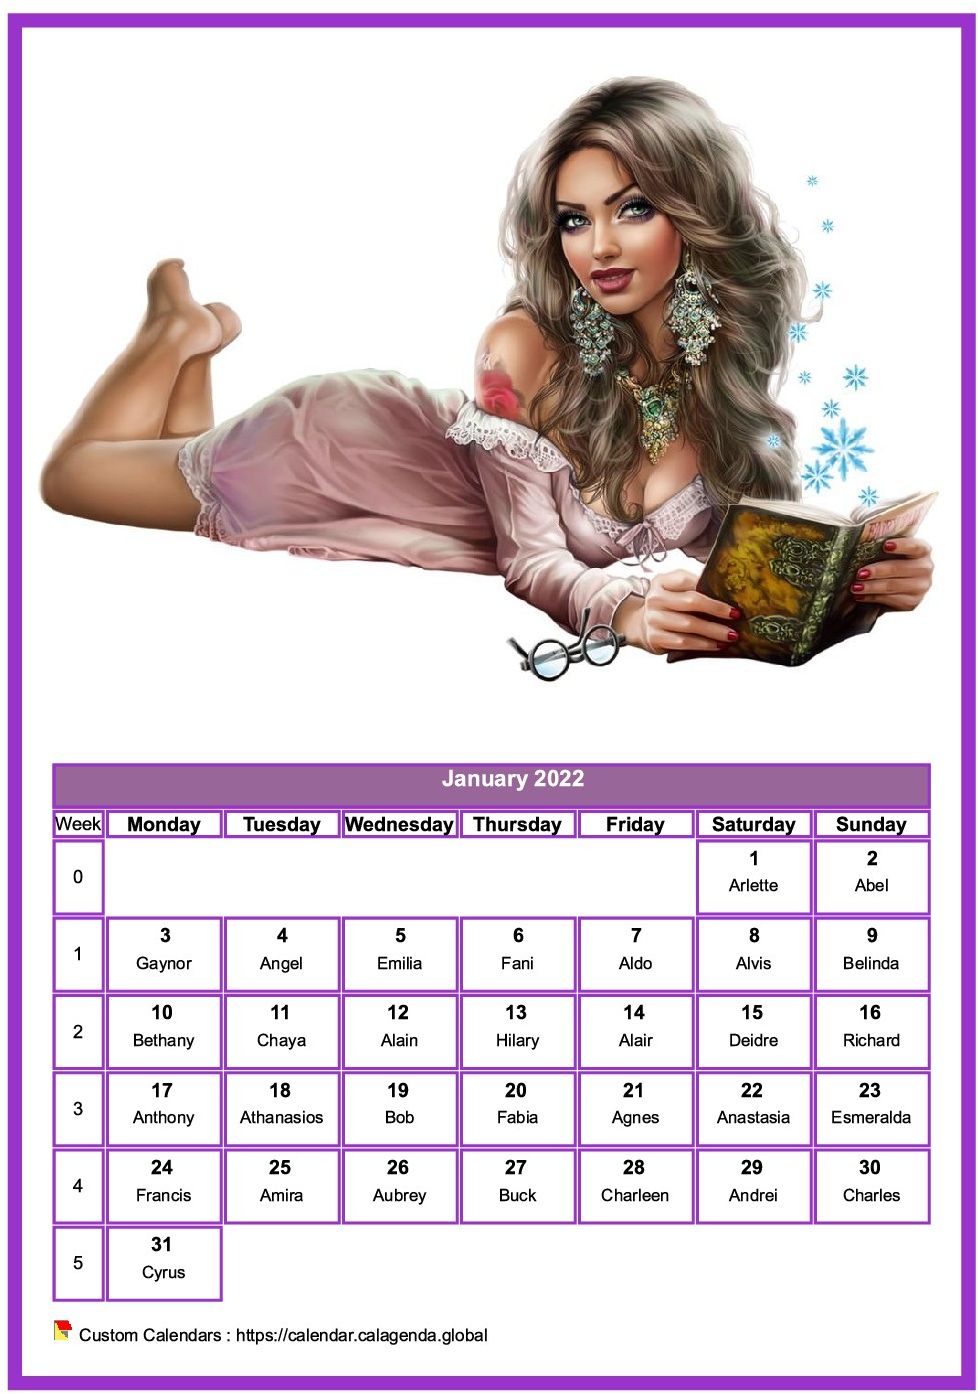 Calendar January 2022 women